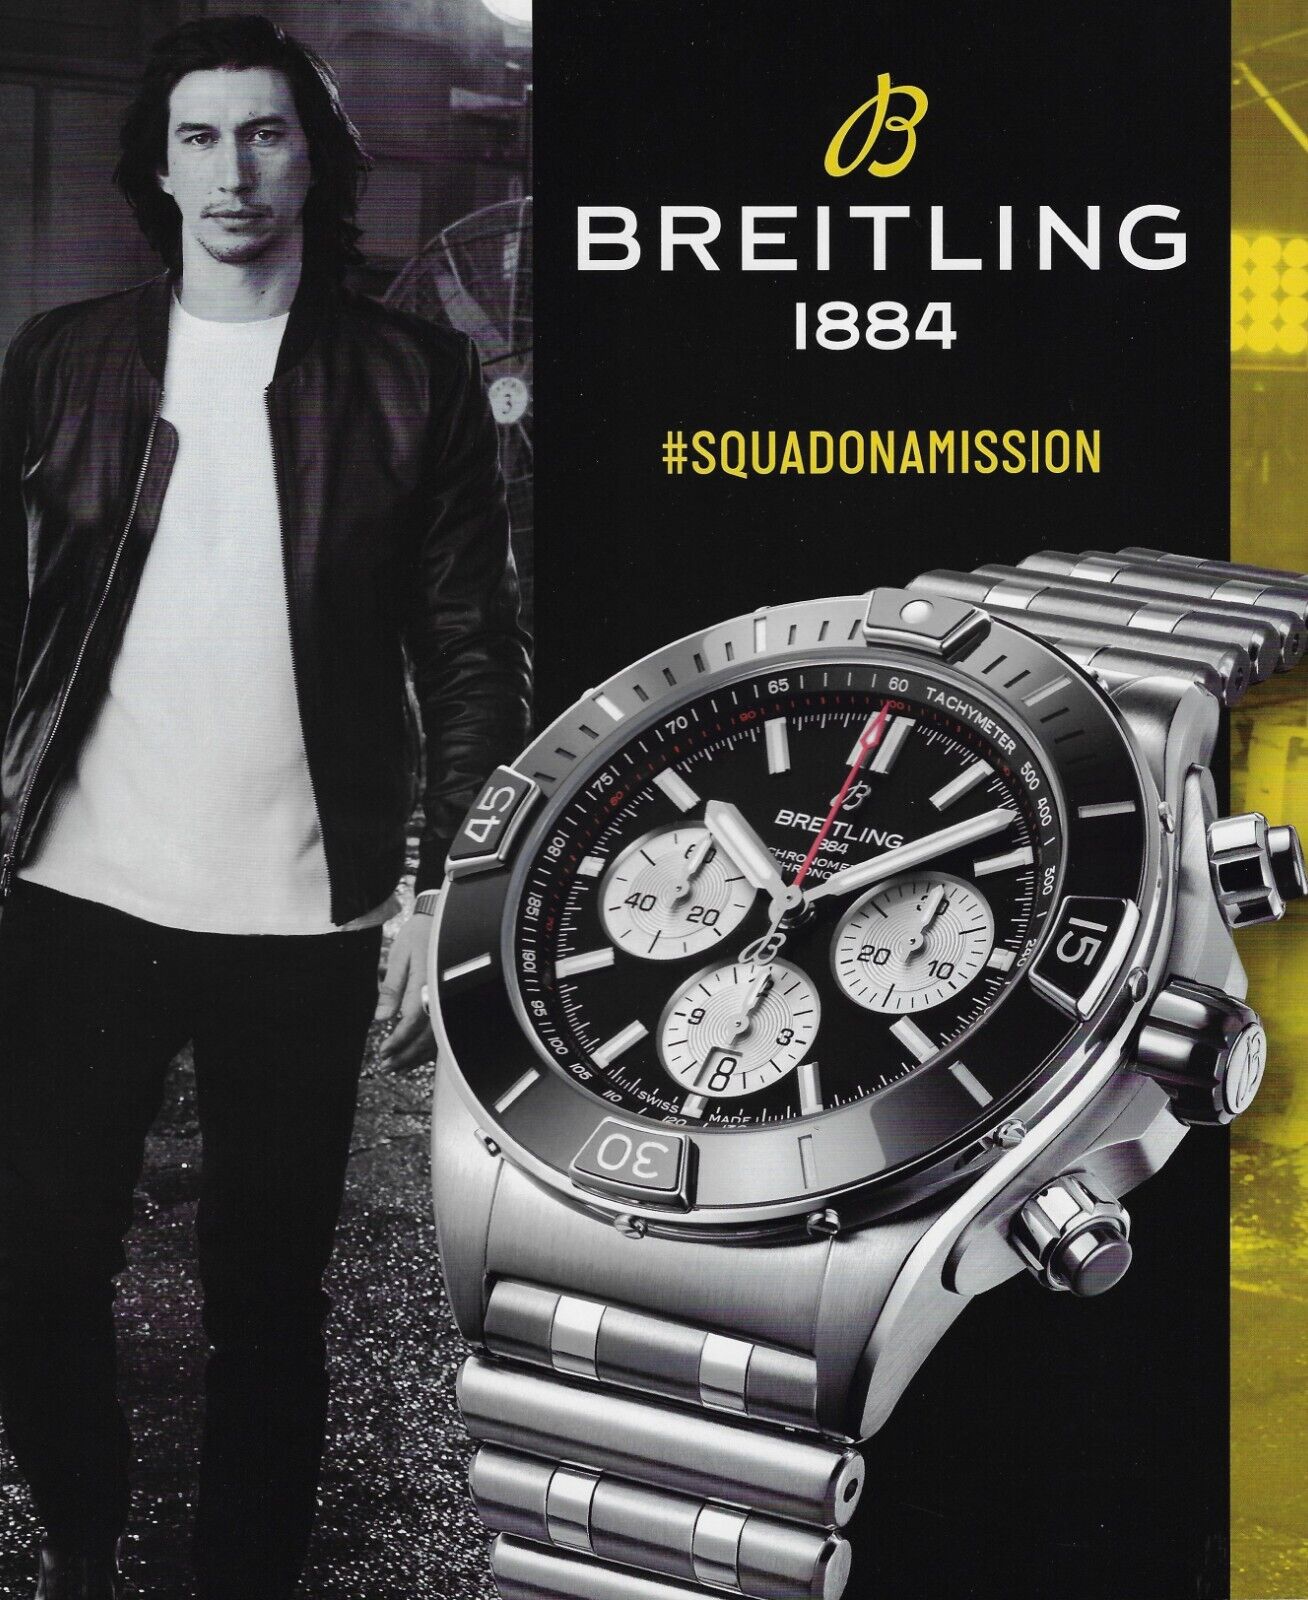 2019 Breitling 1884 Adam Driver Squad on Mission Chronometer Vintage Print Ad x